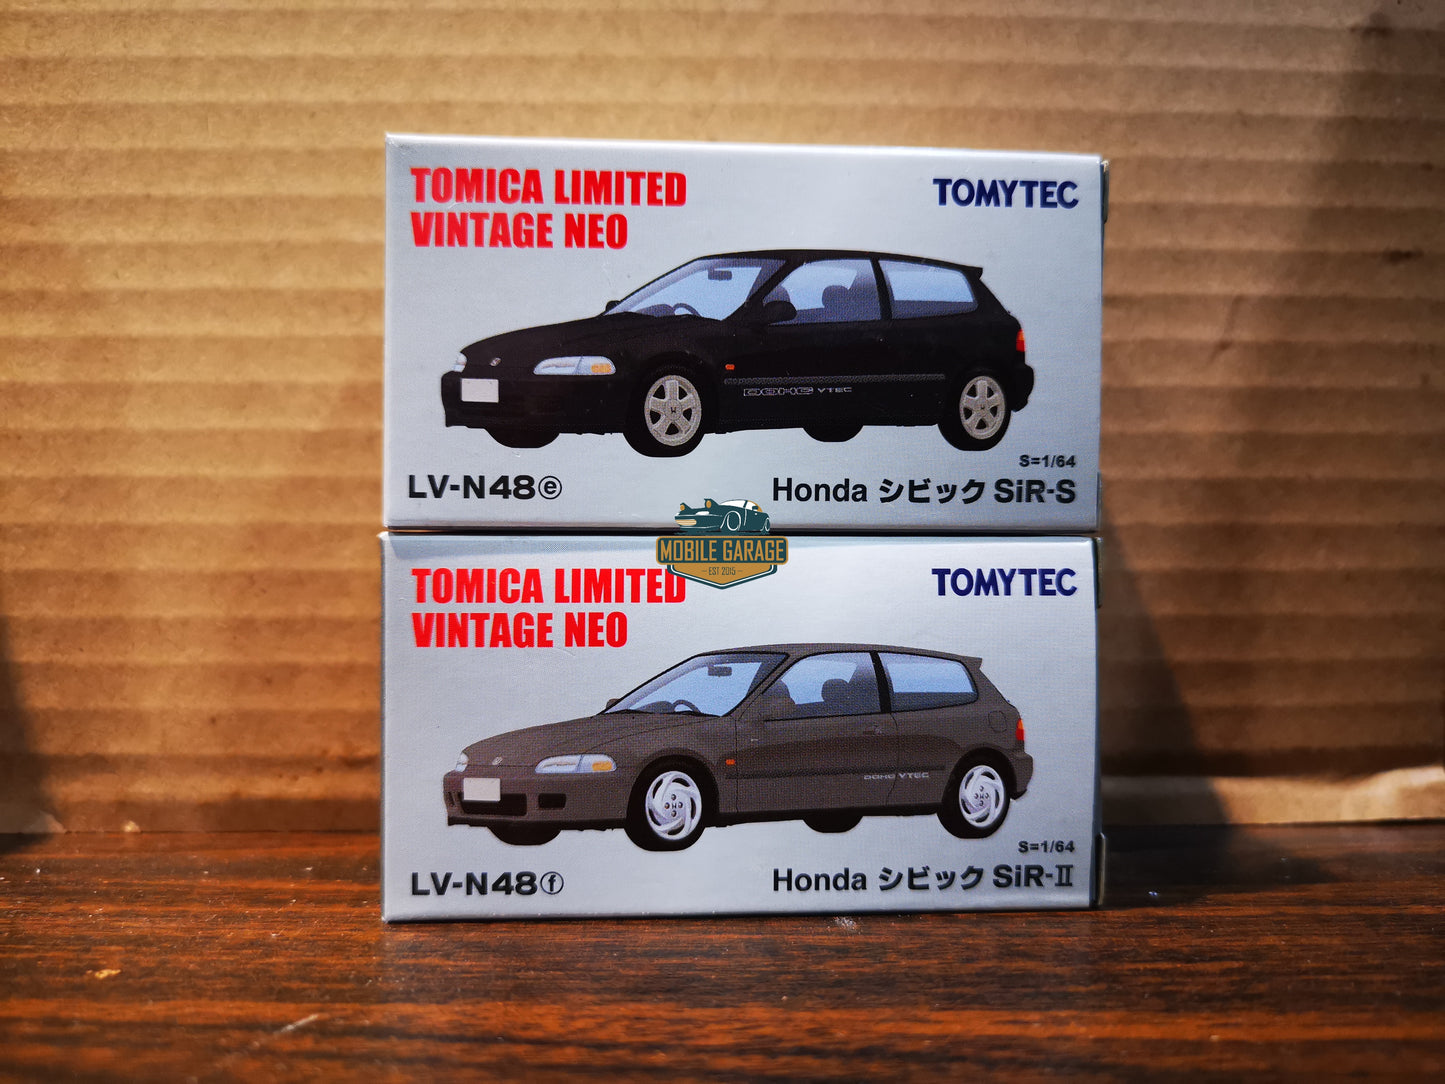 Tomytec Limited Vintage Neo LV-N48e+f Honda Civic EF SiR-II set of two